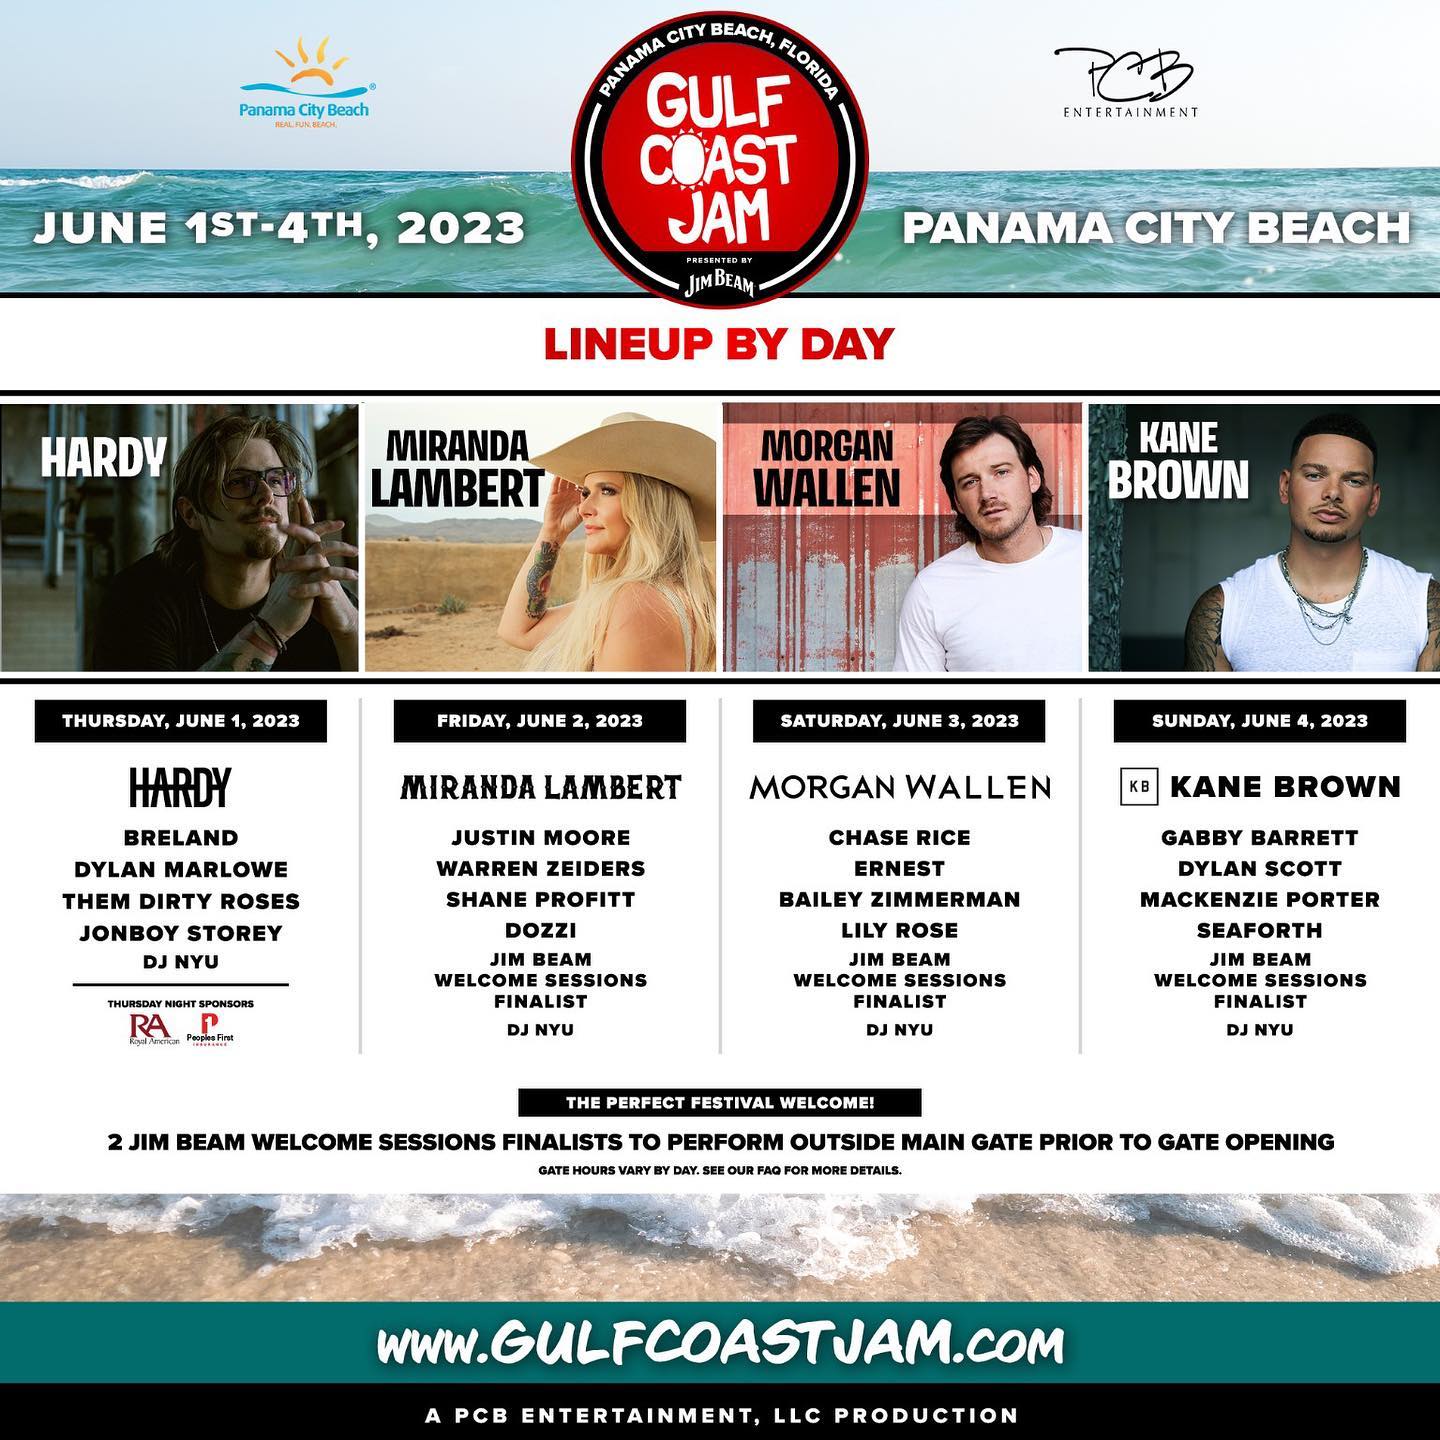 Gulf Coast Jam - Panama City Beach, FL